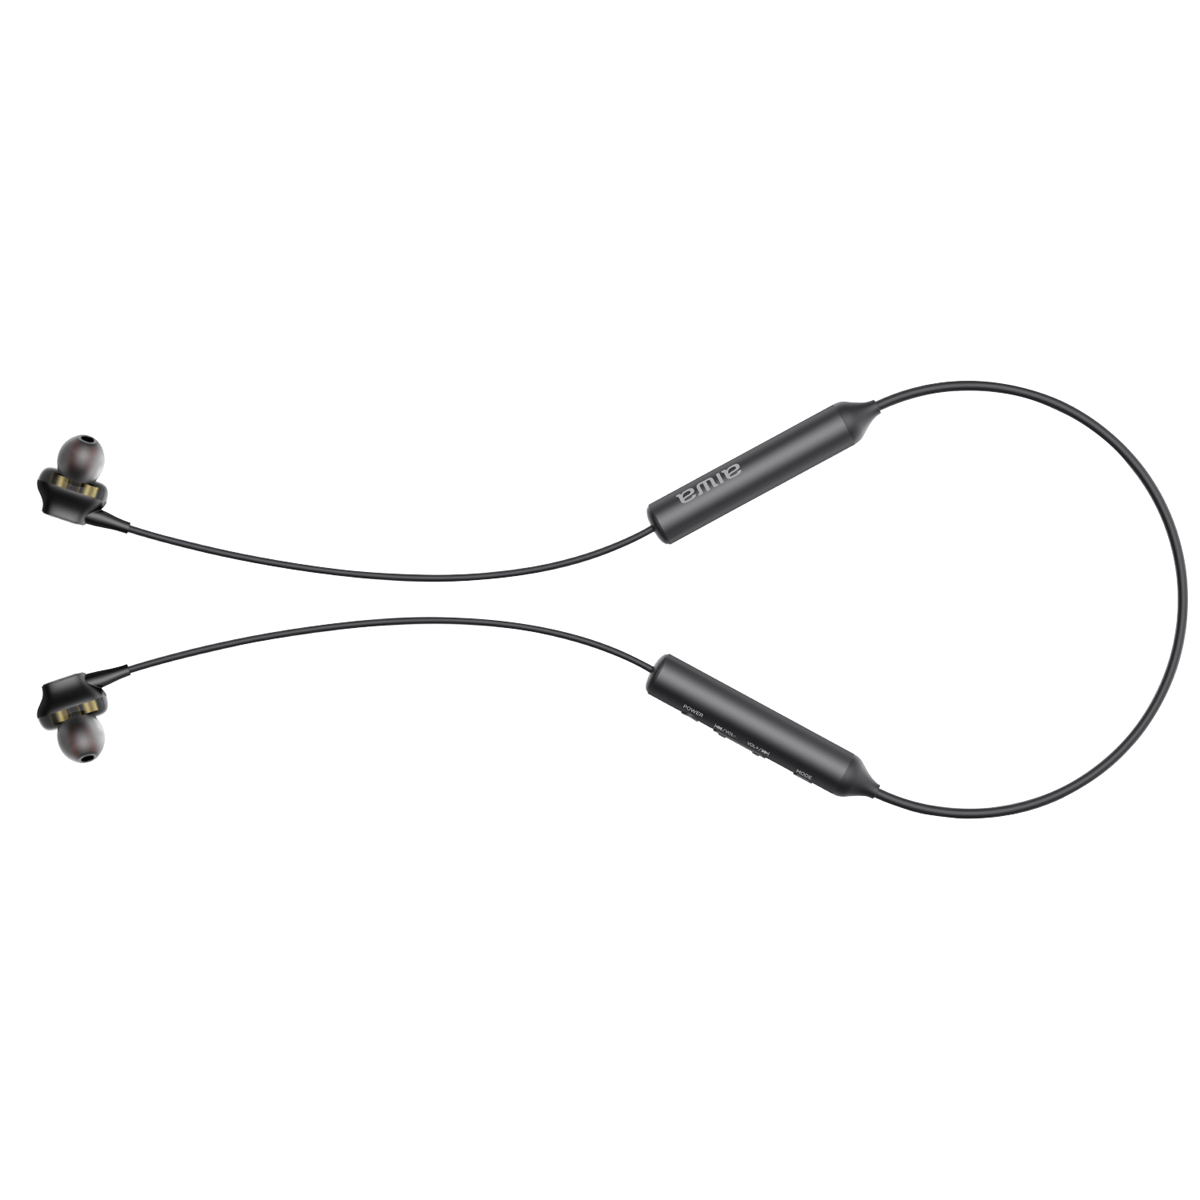 AIWA ESTBT-450BK, Neckband Kopfhörer Bluetooth Schwarz